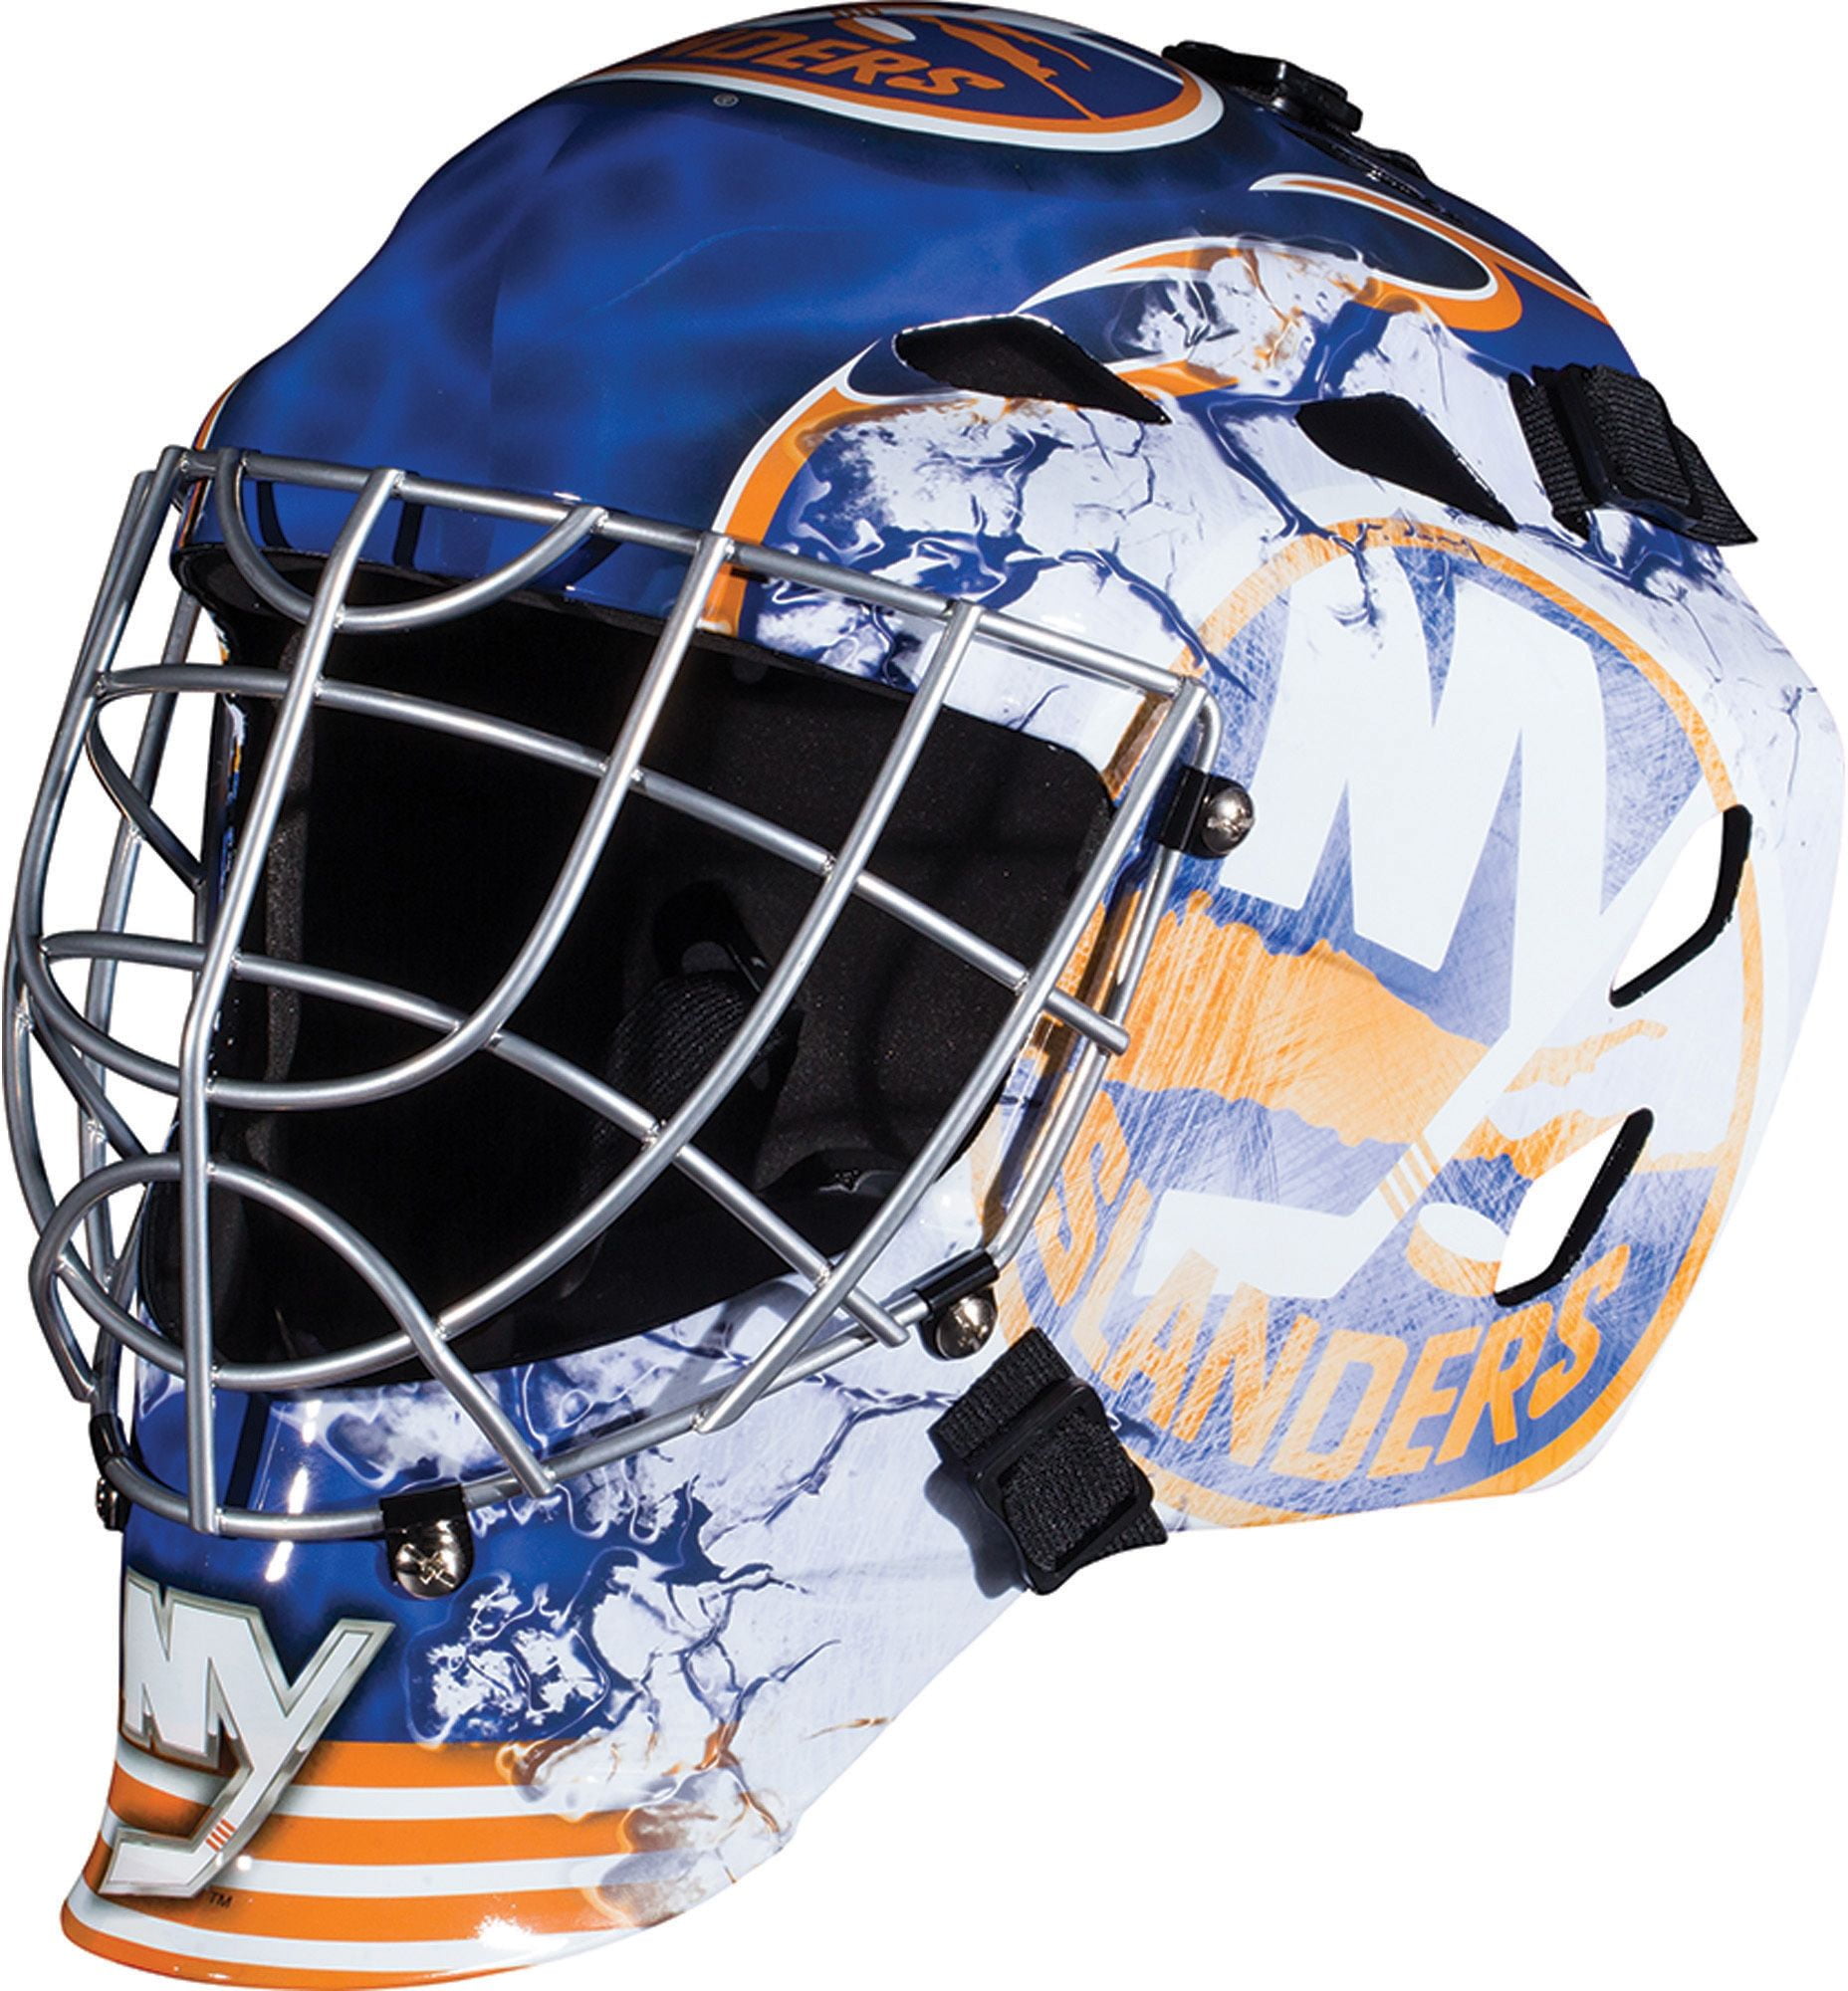 New York Islanders Adjustable Sports Fan Shop NHL Apparel & Souvenir  Hockey